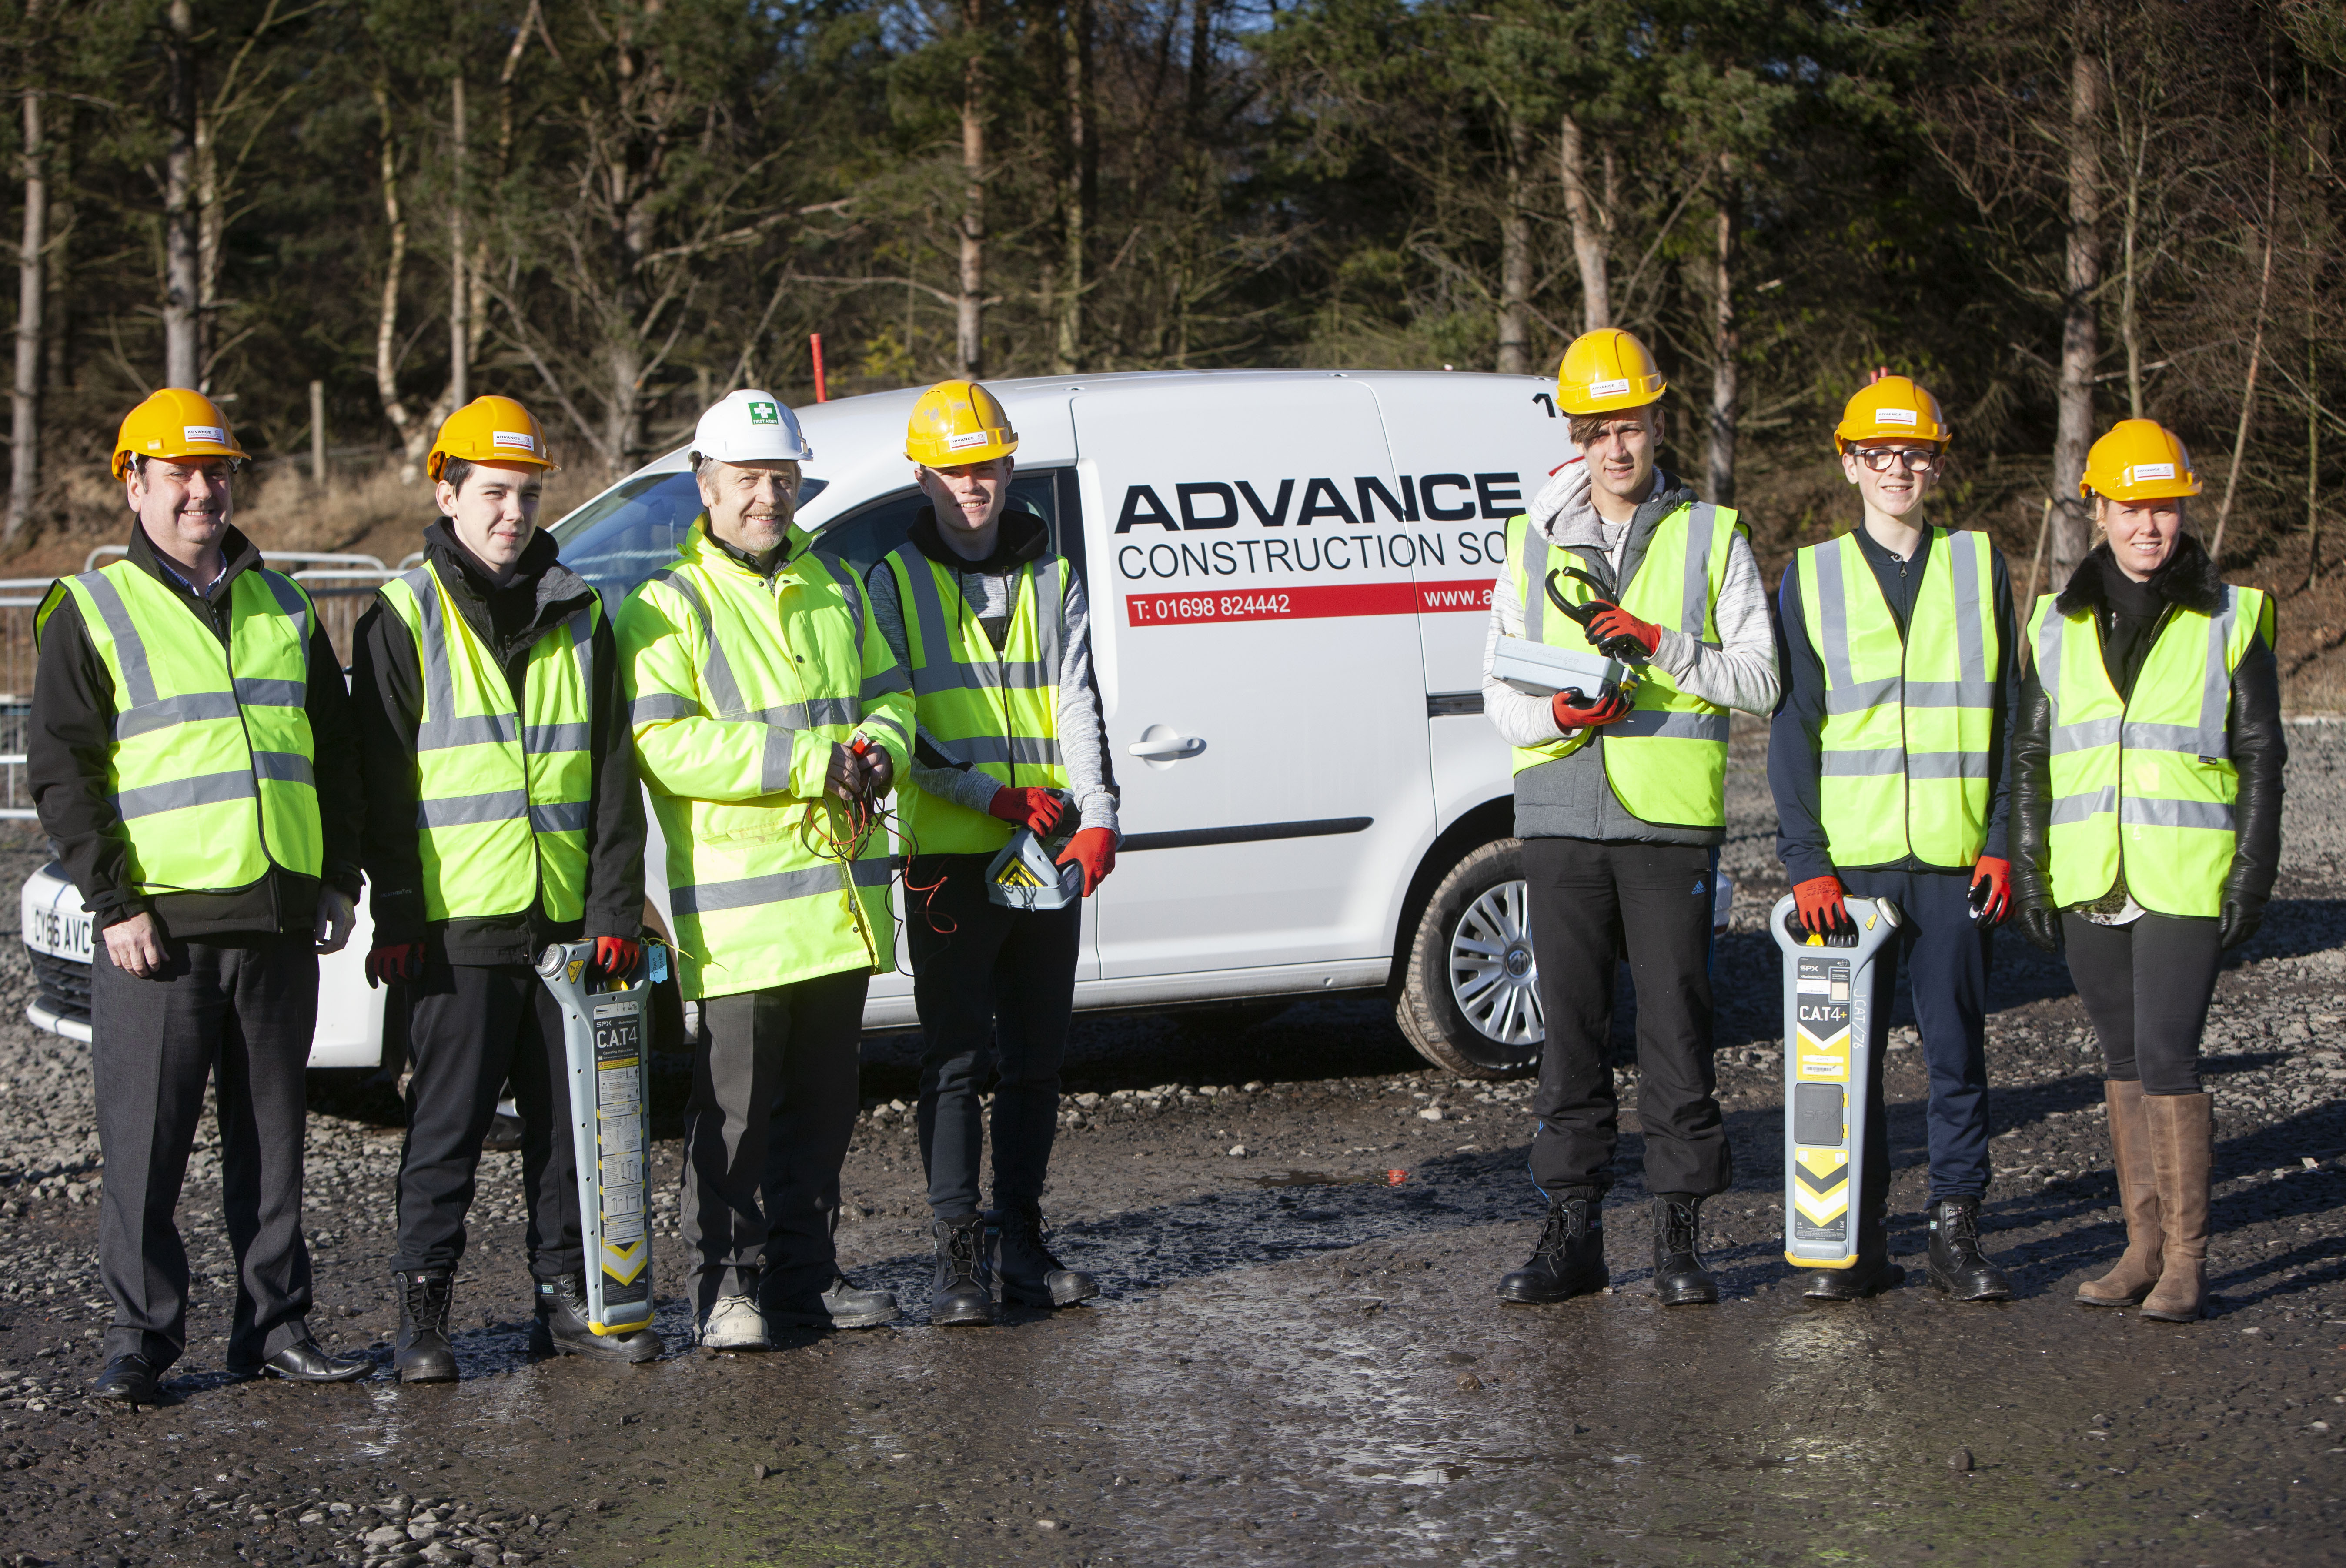 Advance Construction Scotland helps build workforce of tomorrow